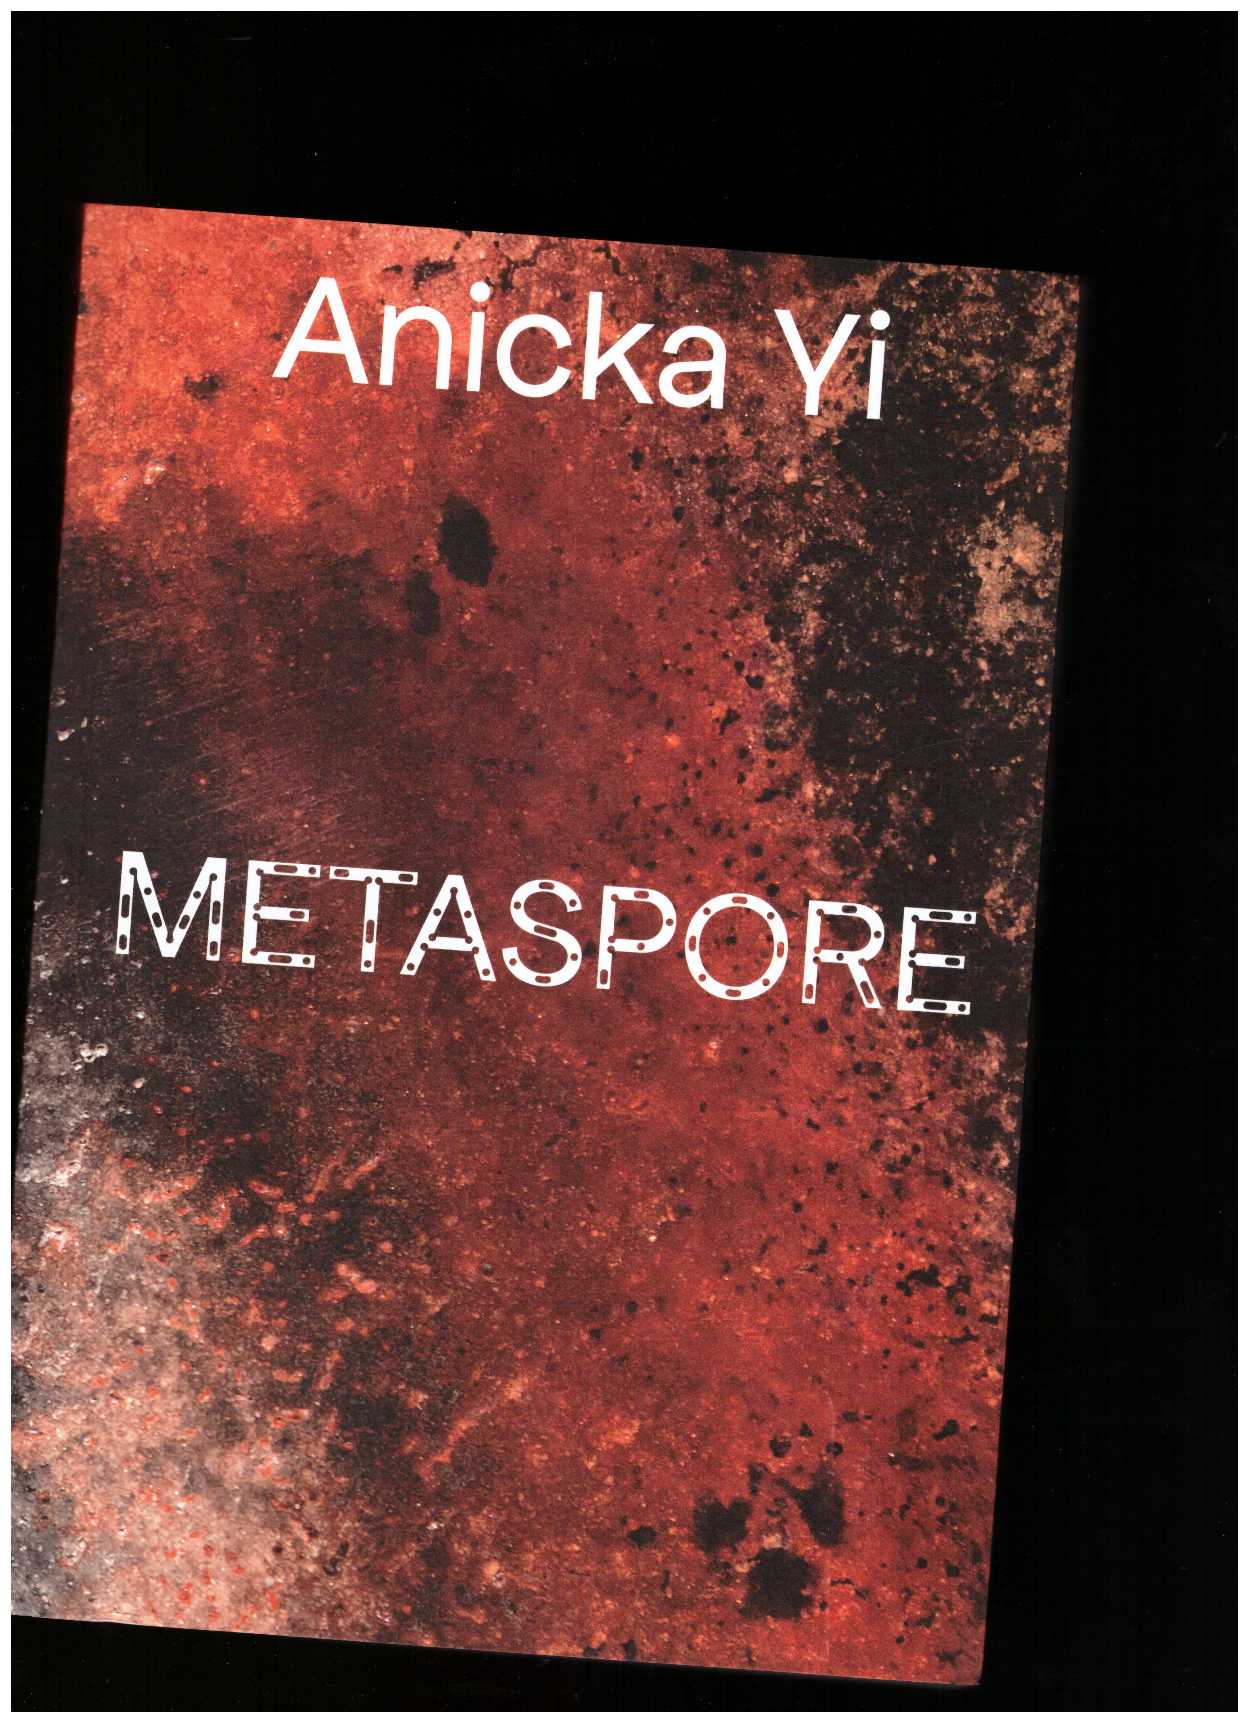 YI, Anicka - Anicka Yi: Metaspore